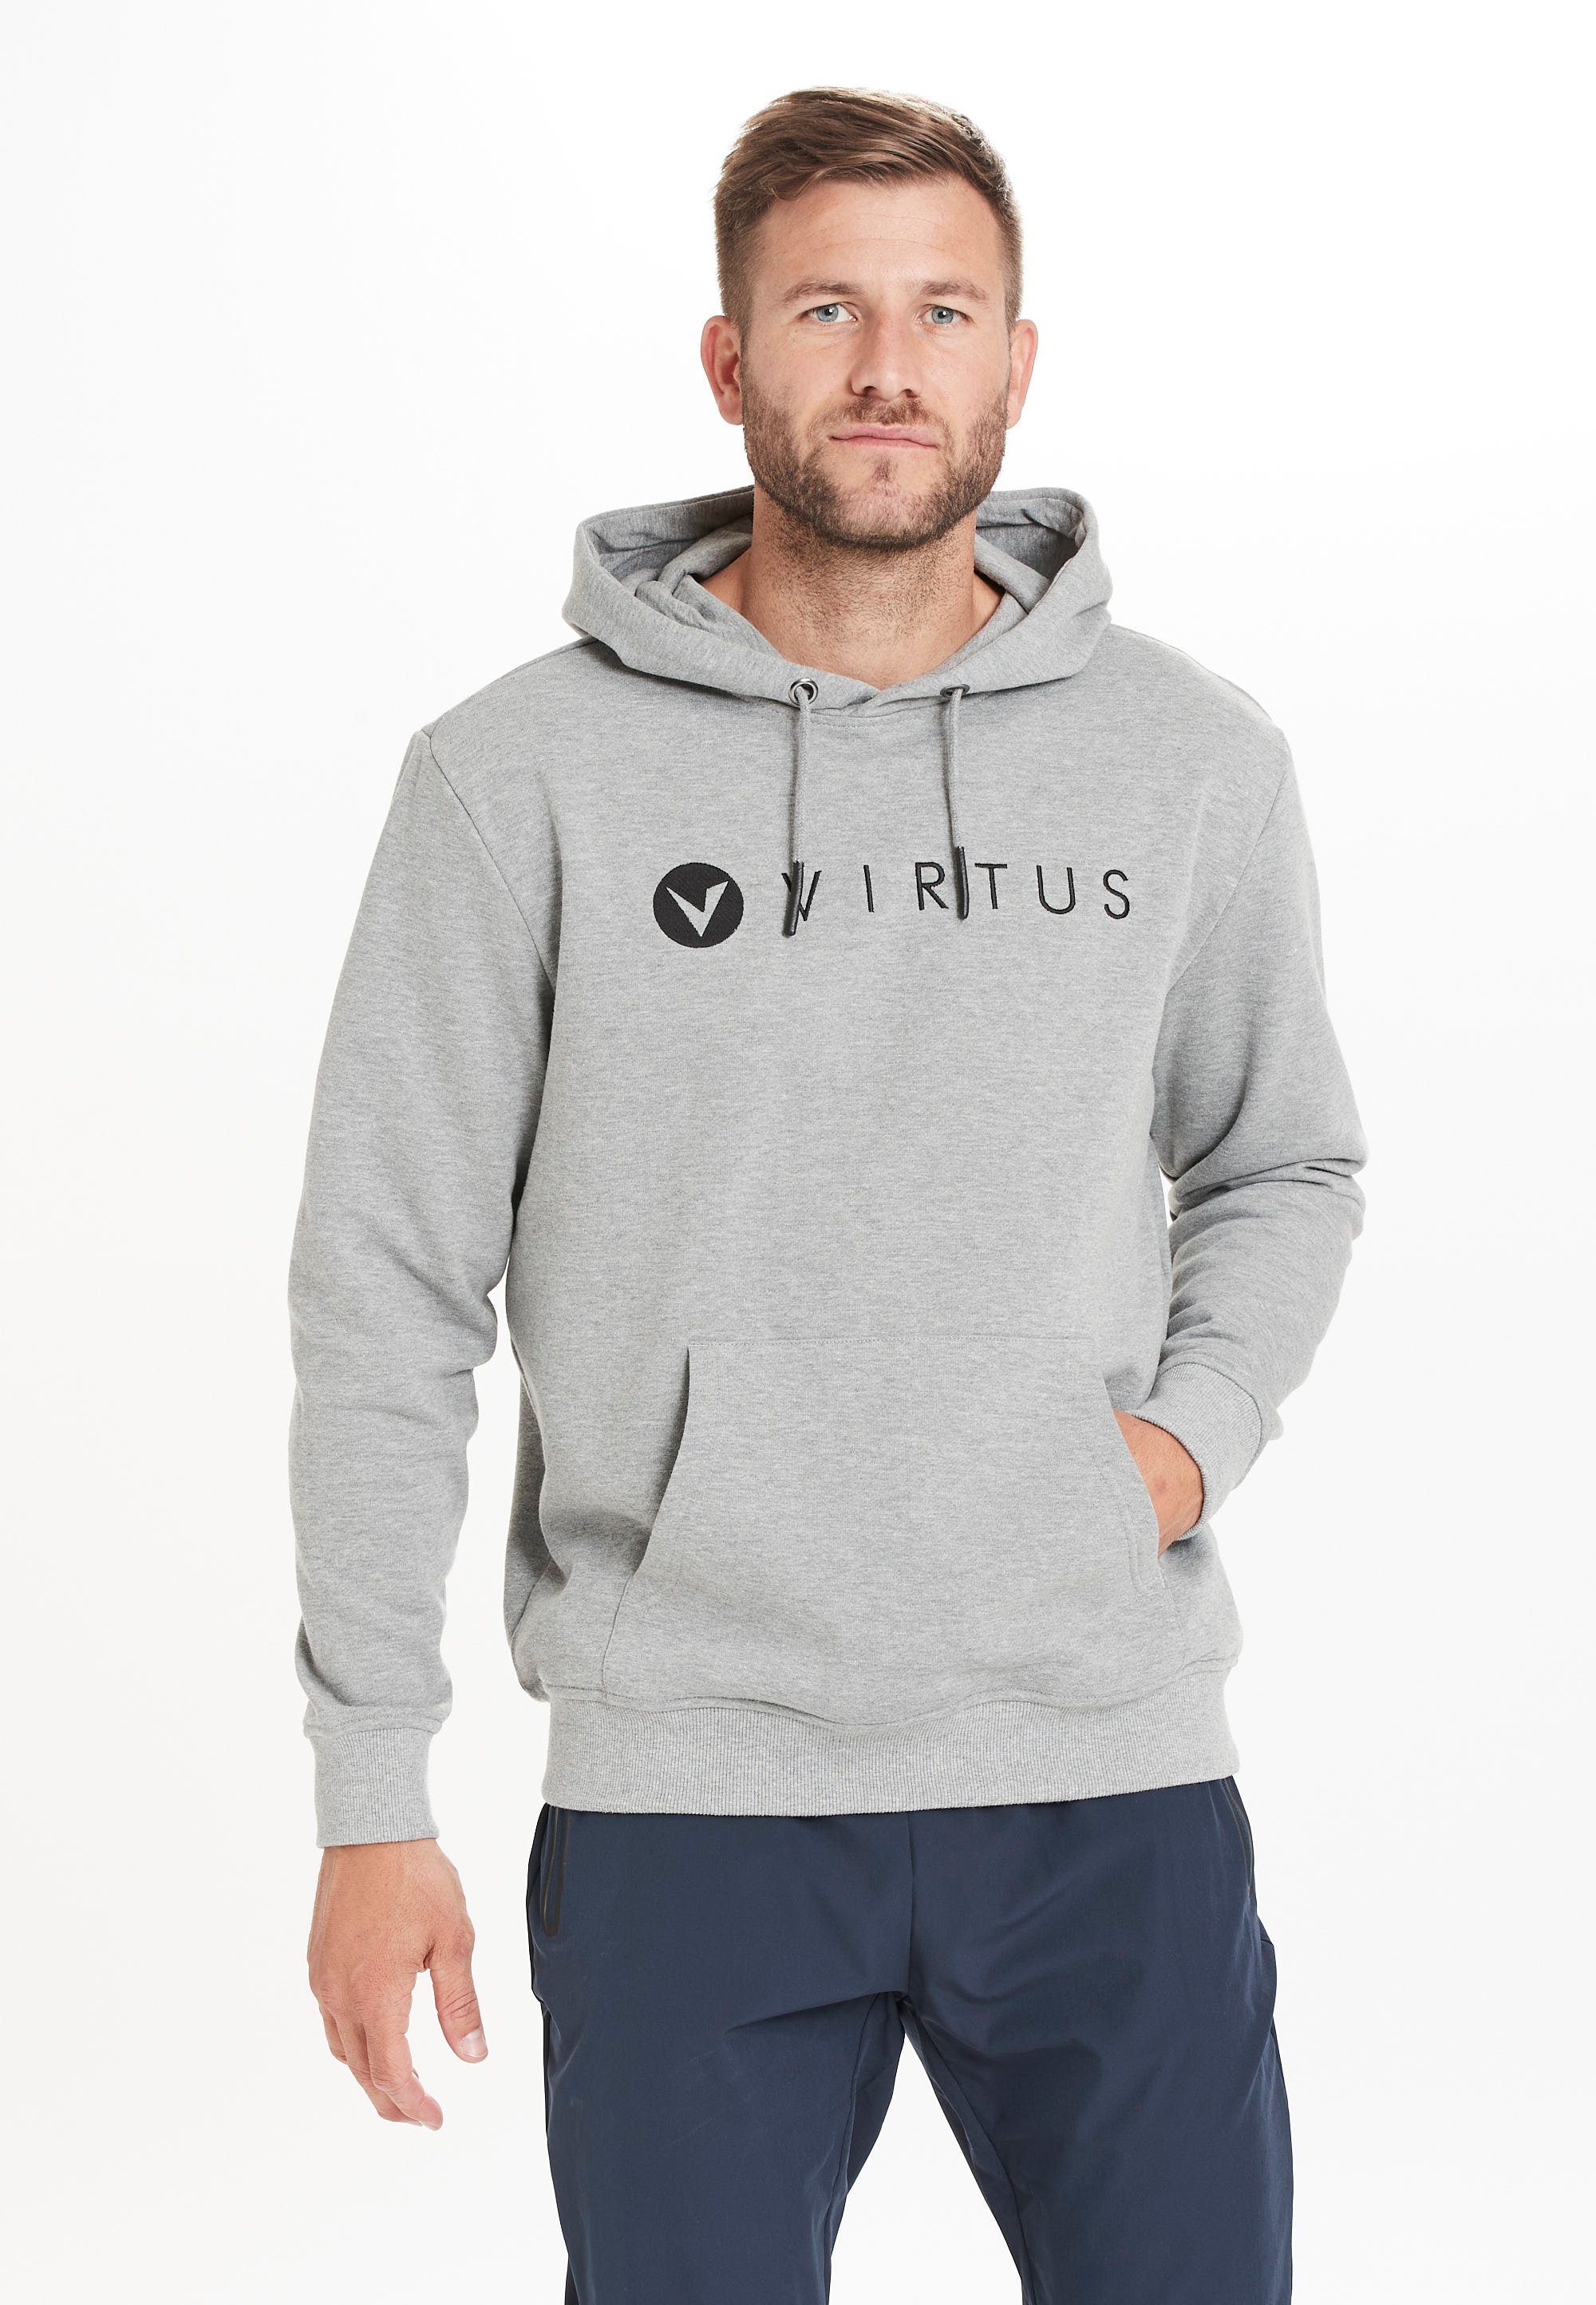 Virtus Kapuzensweatshirt Matis V2 mit coolem Markenprint grau-meliert